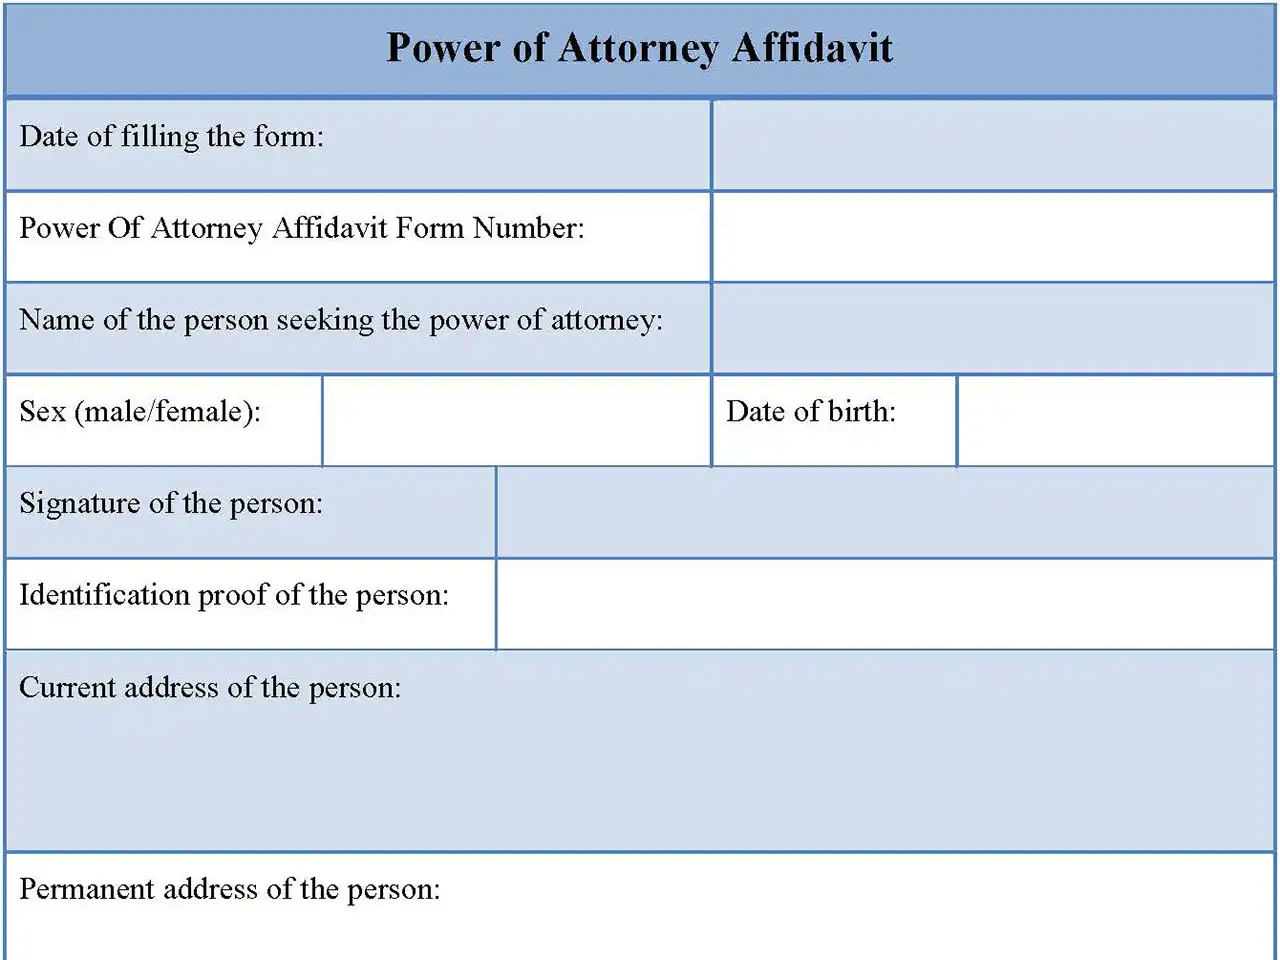 Power of Attorney Affidavit Form